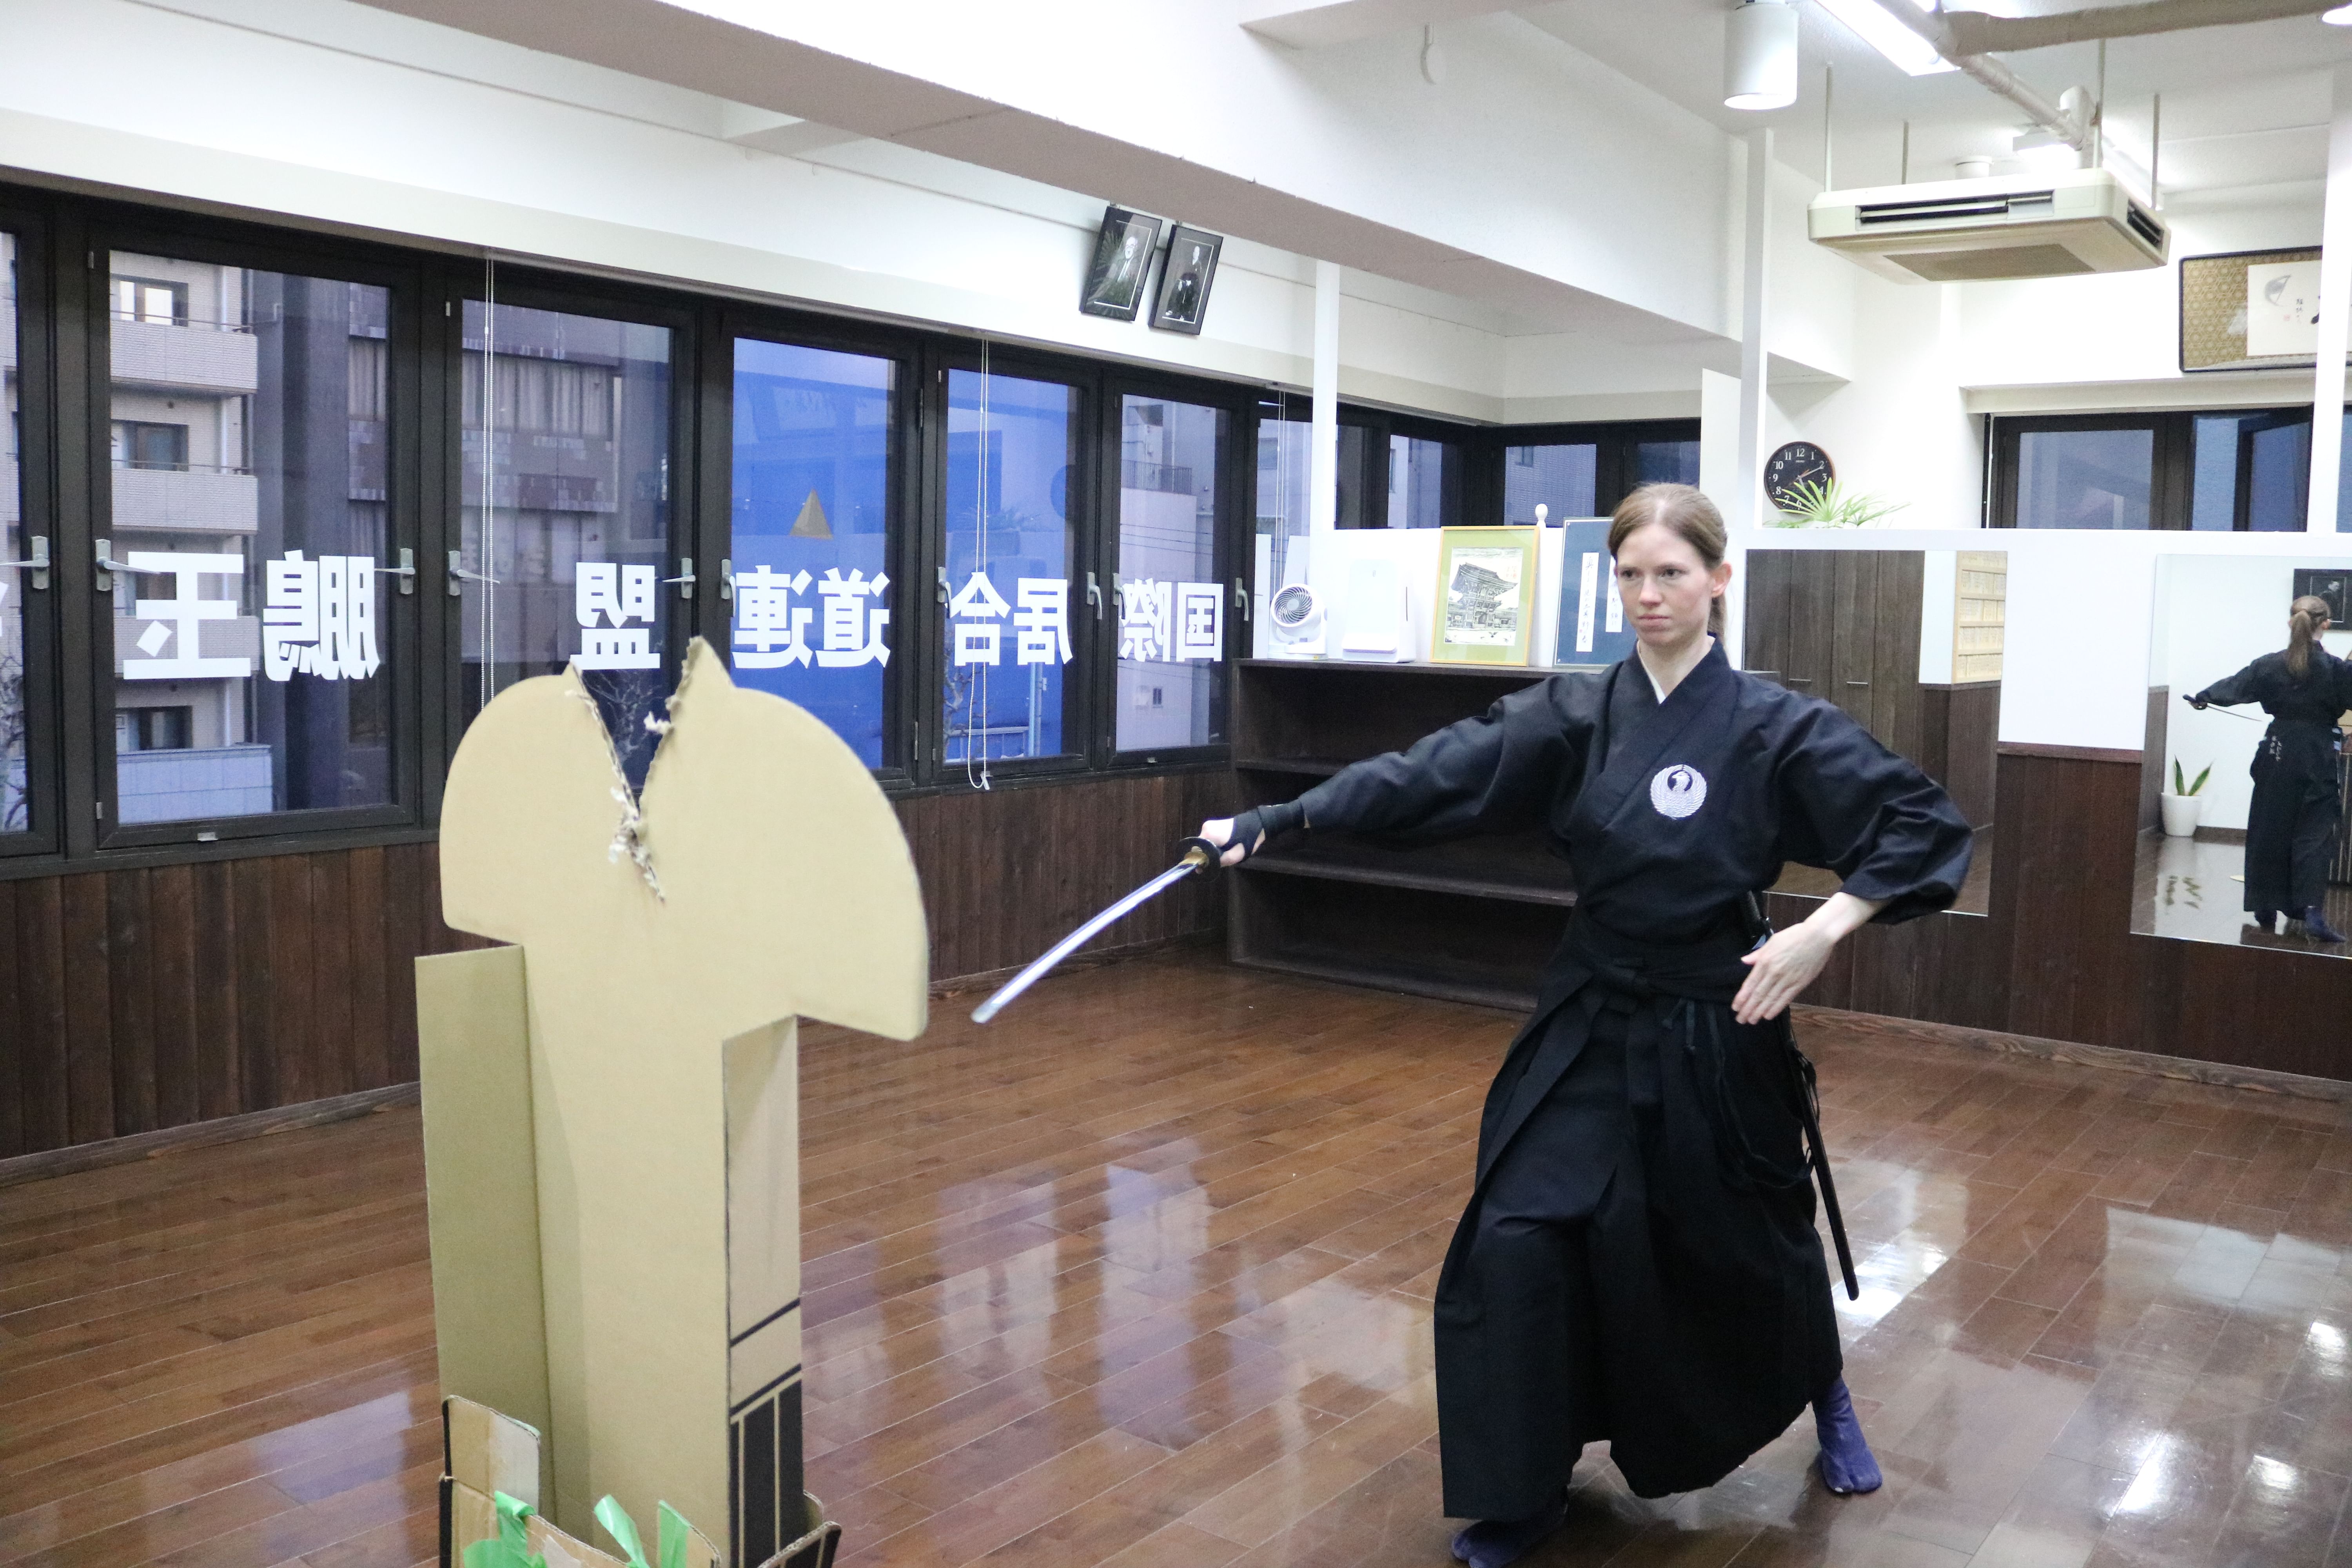 SAMURAI Experience Mugai Ryu Iaido in Tokyo